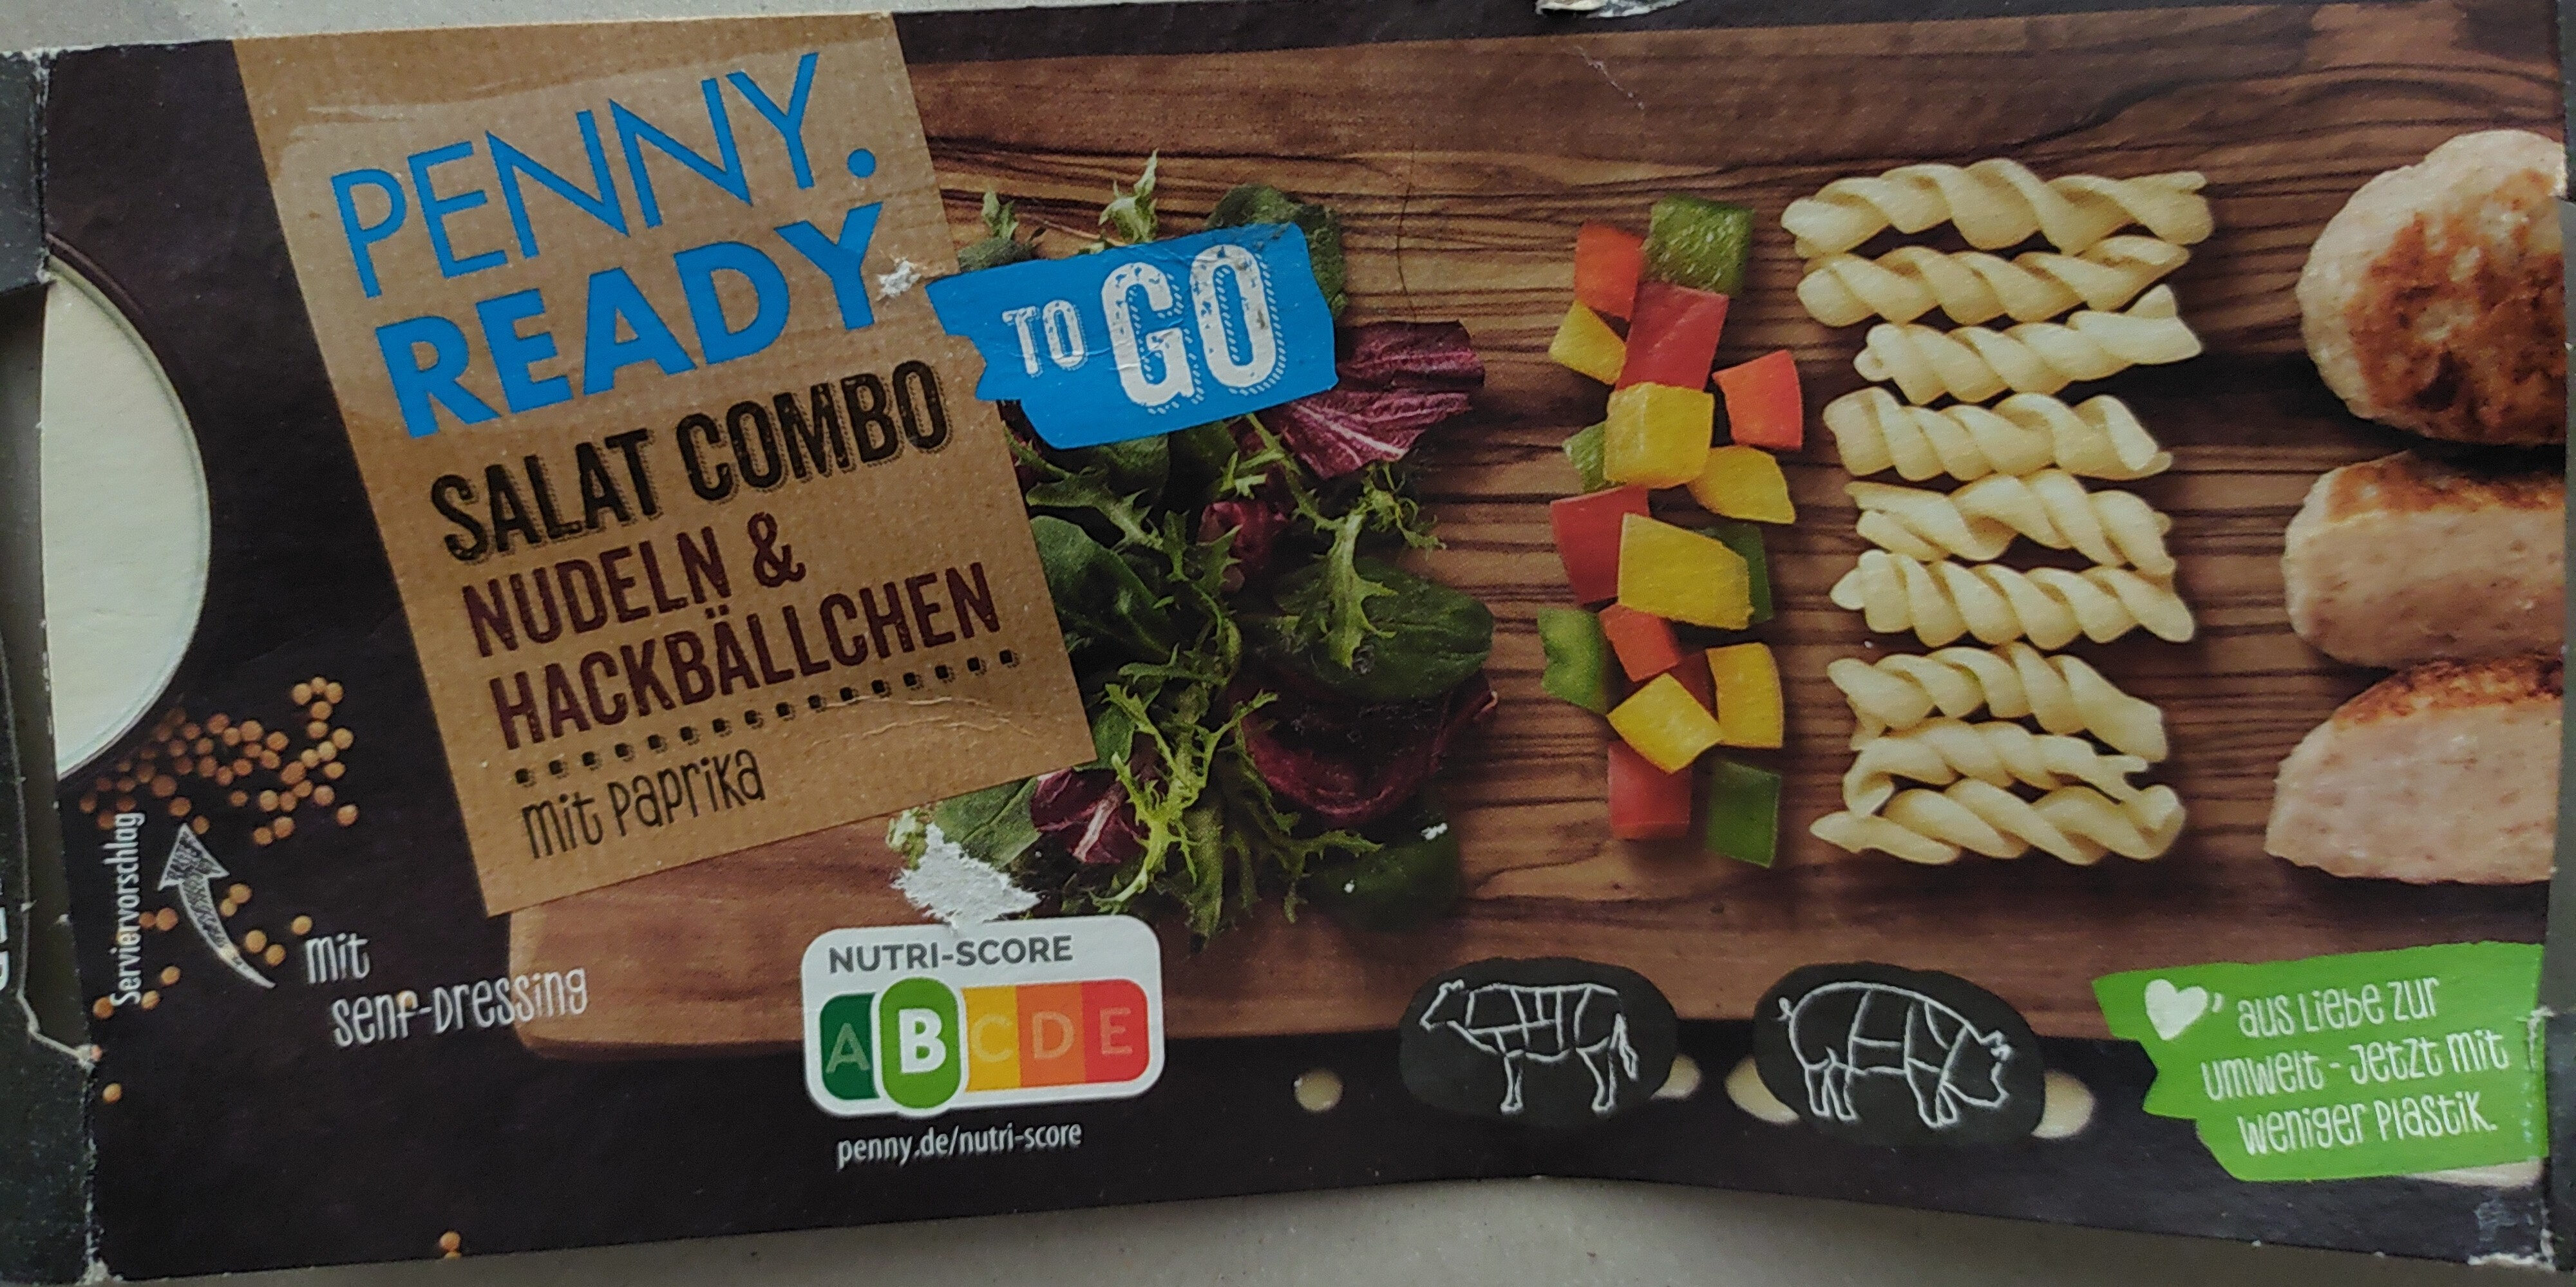 Salat Combo - Nudeln & Hackbällchen mit Paprika - Produit - de